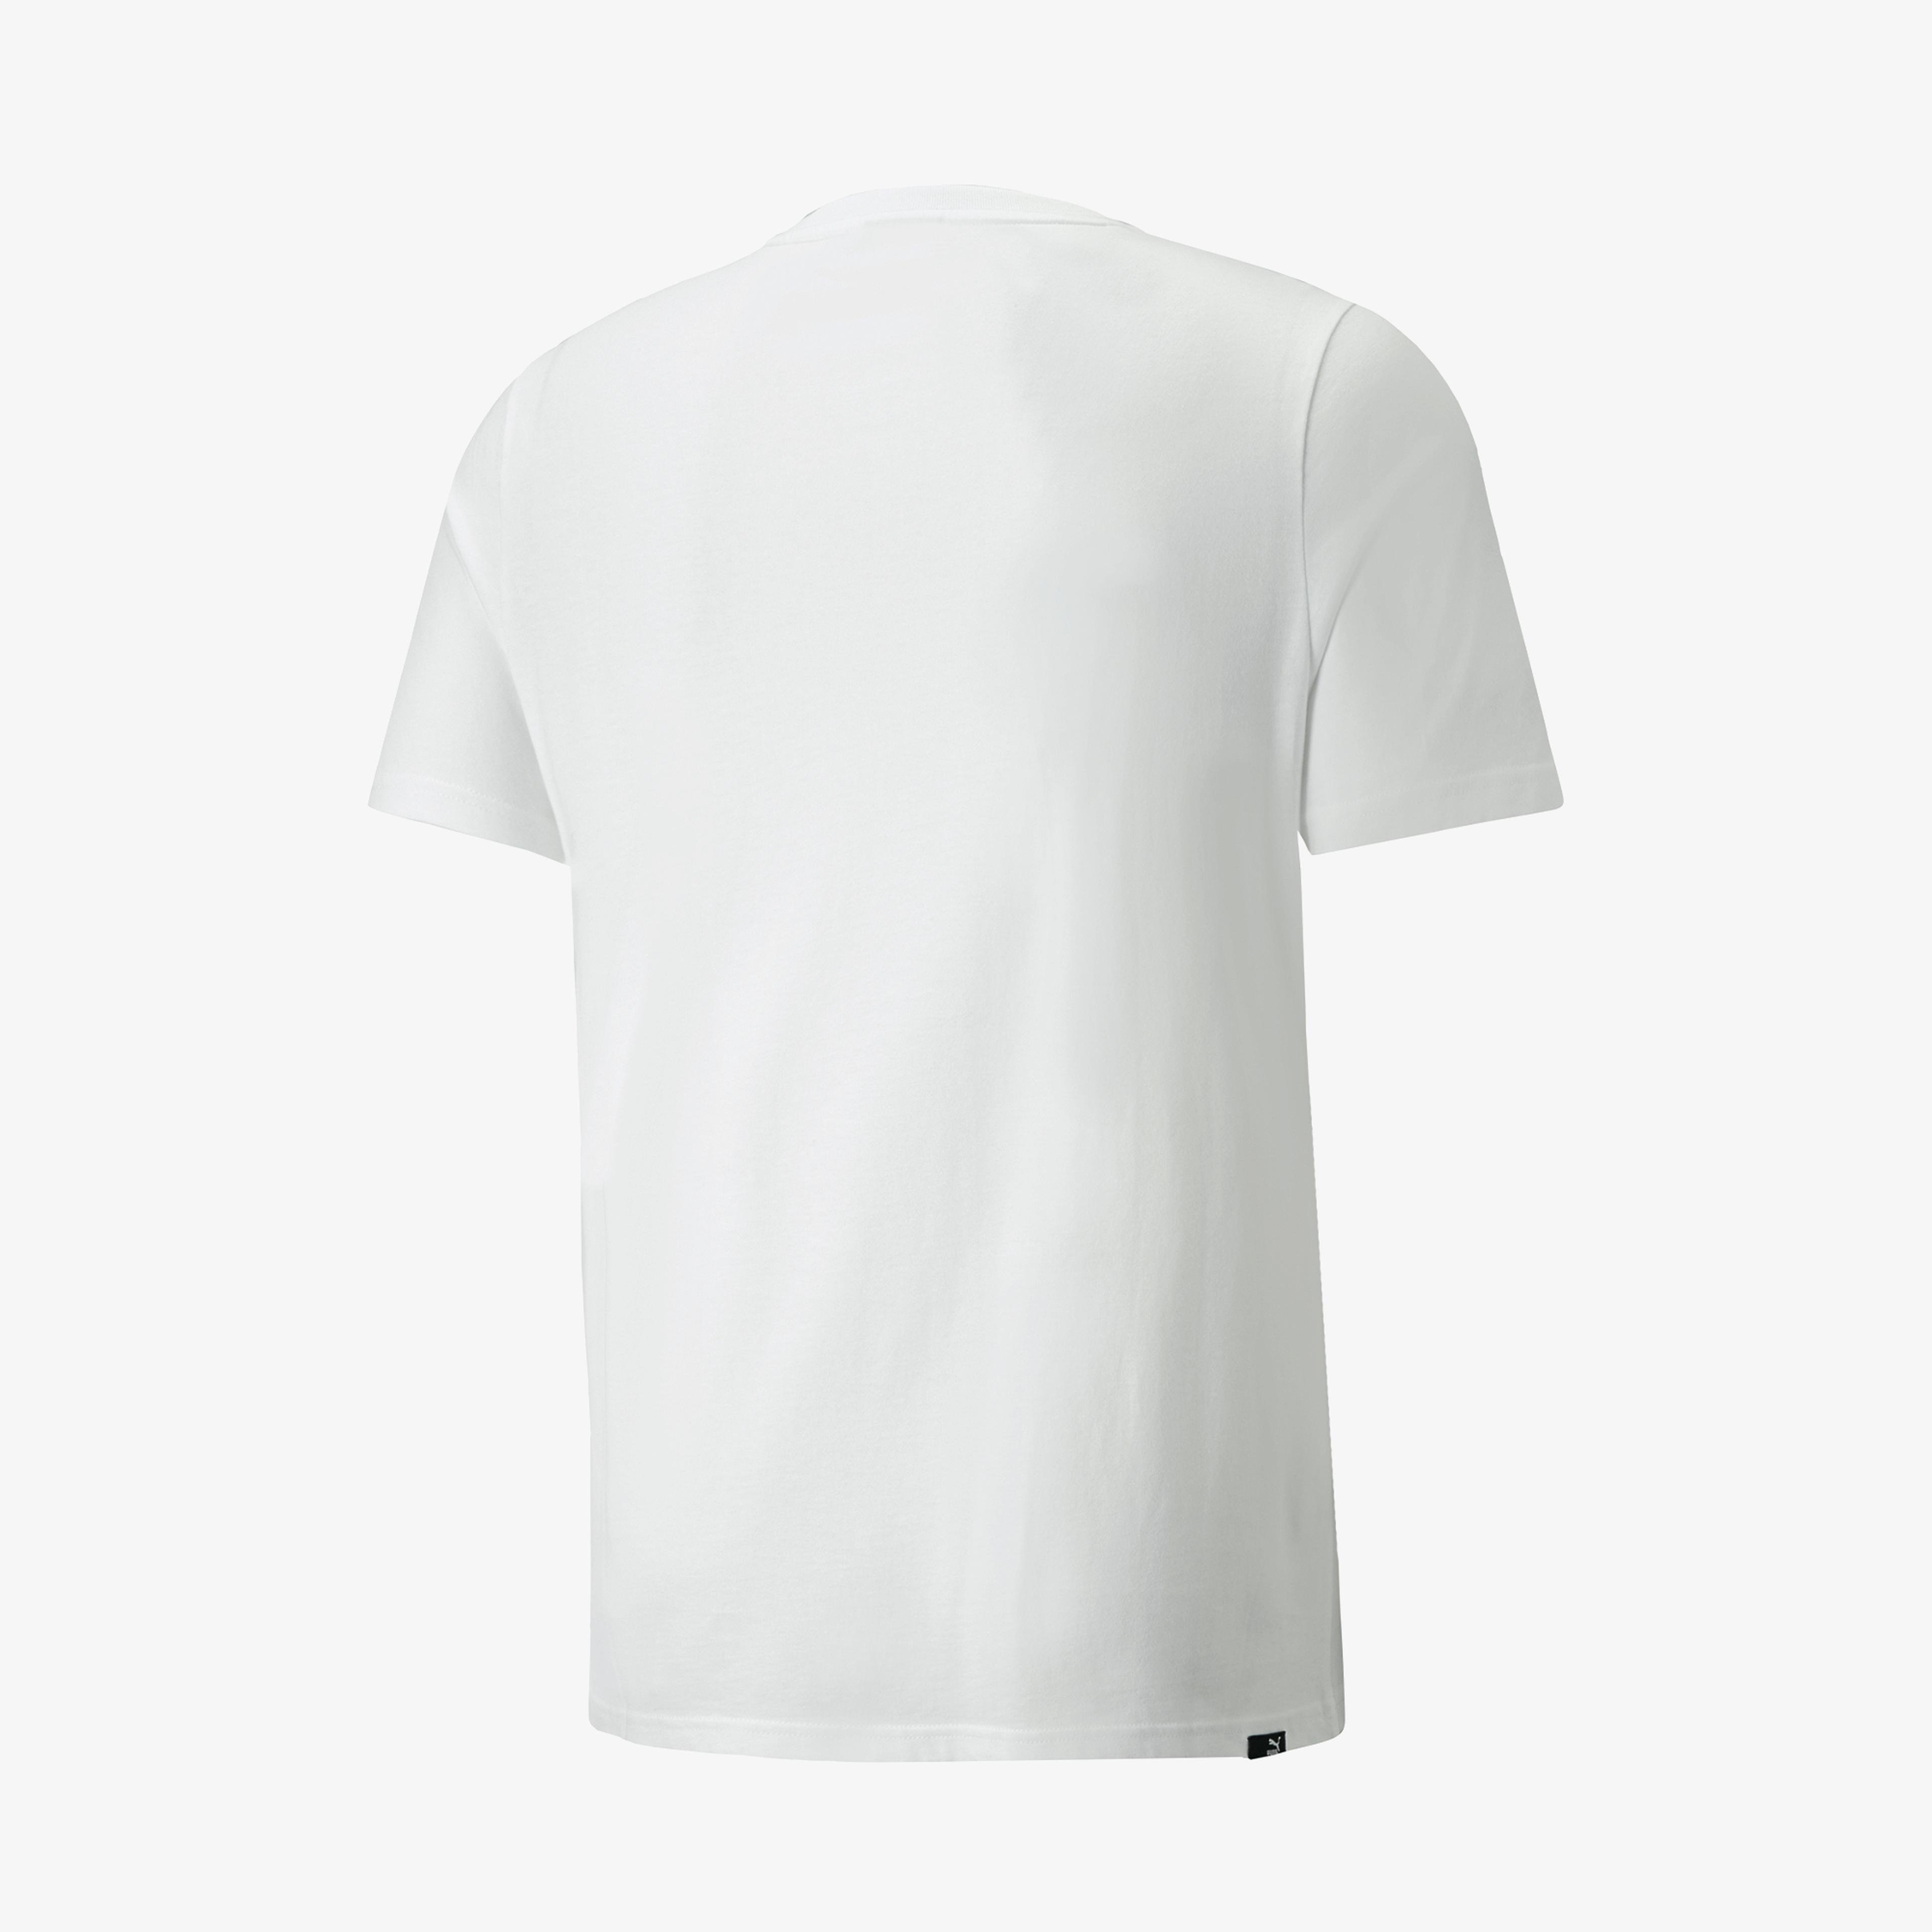 Puma Brand Love Erkek Beyaz T-Shirt